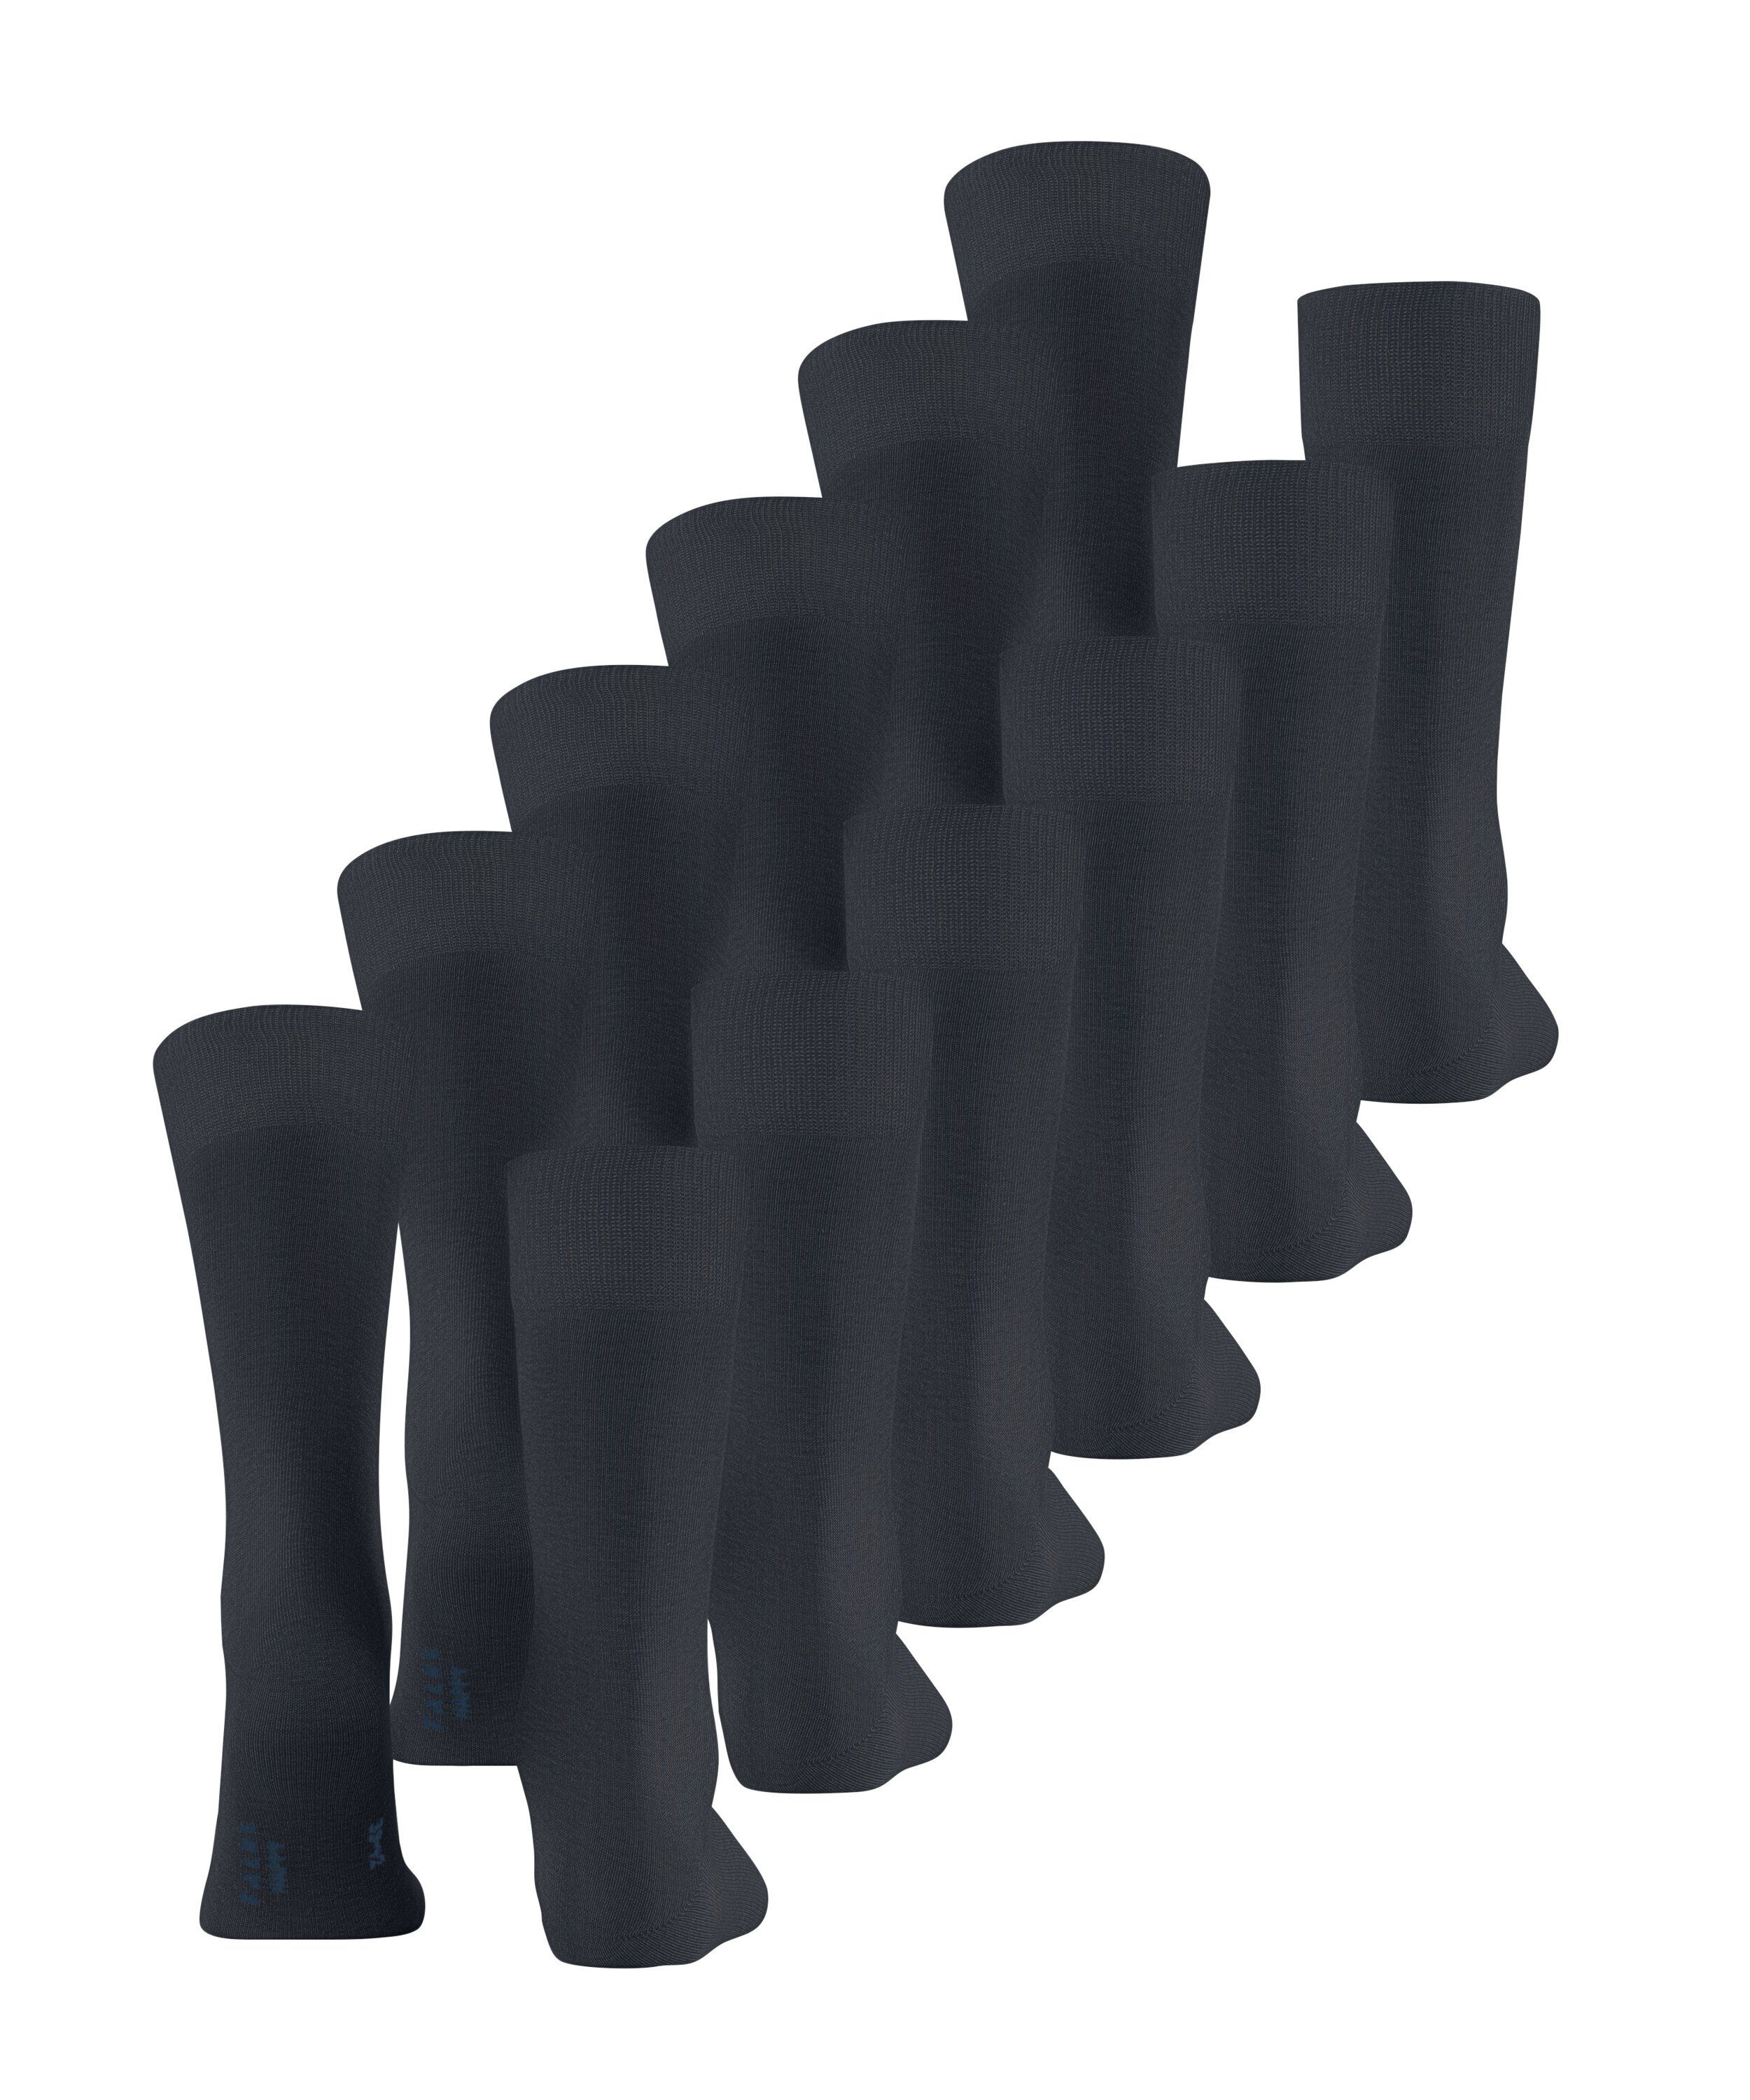 (6375) Happy navy Socken (6-Paar) FALKE dark 6-Pack